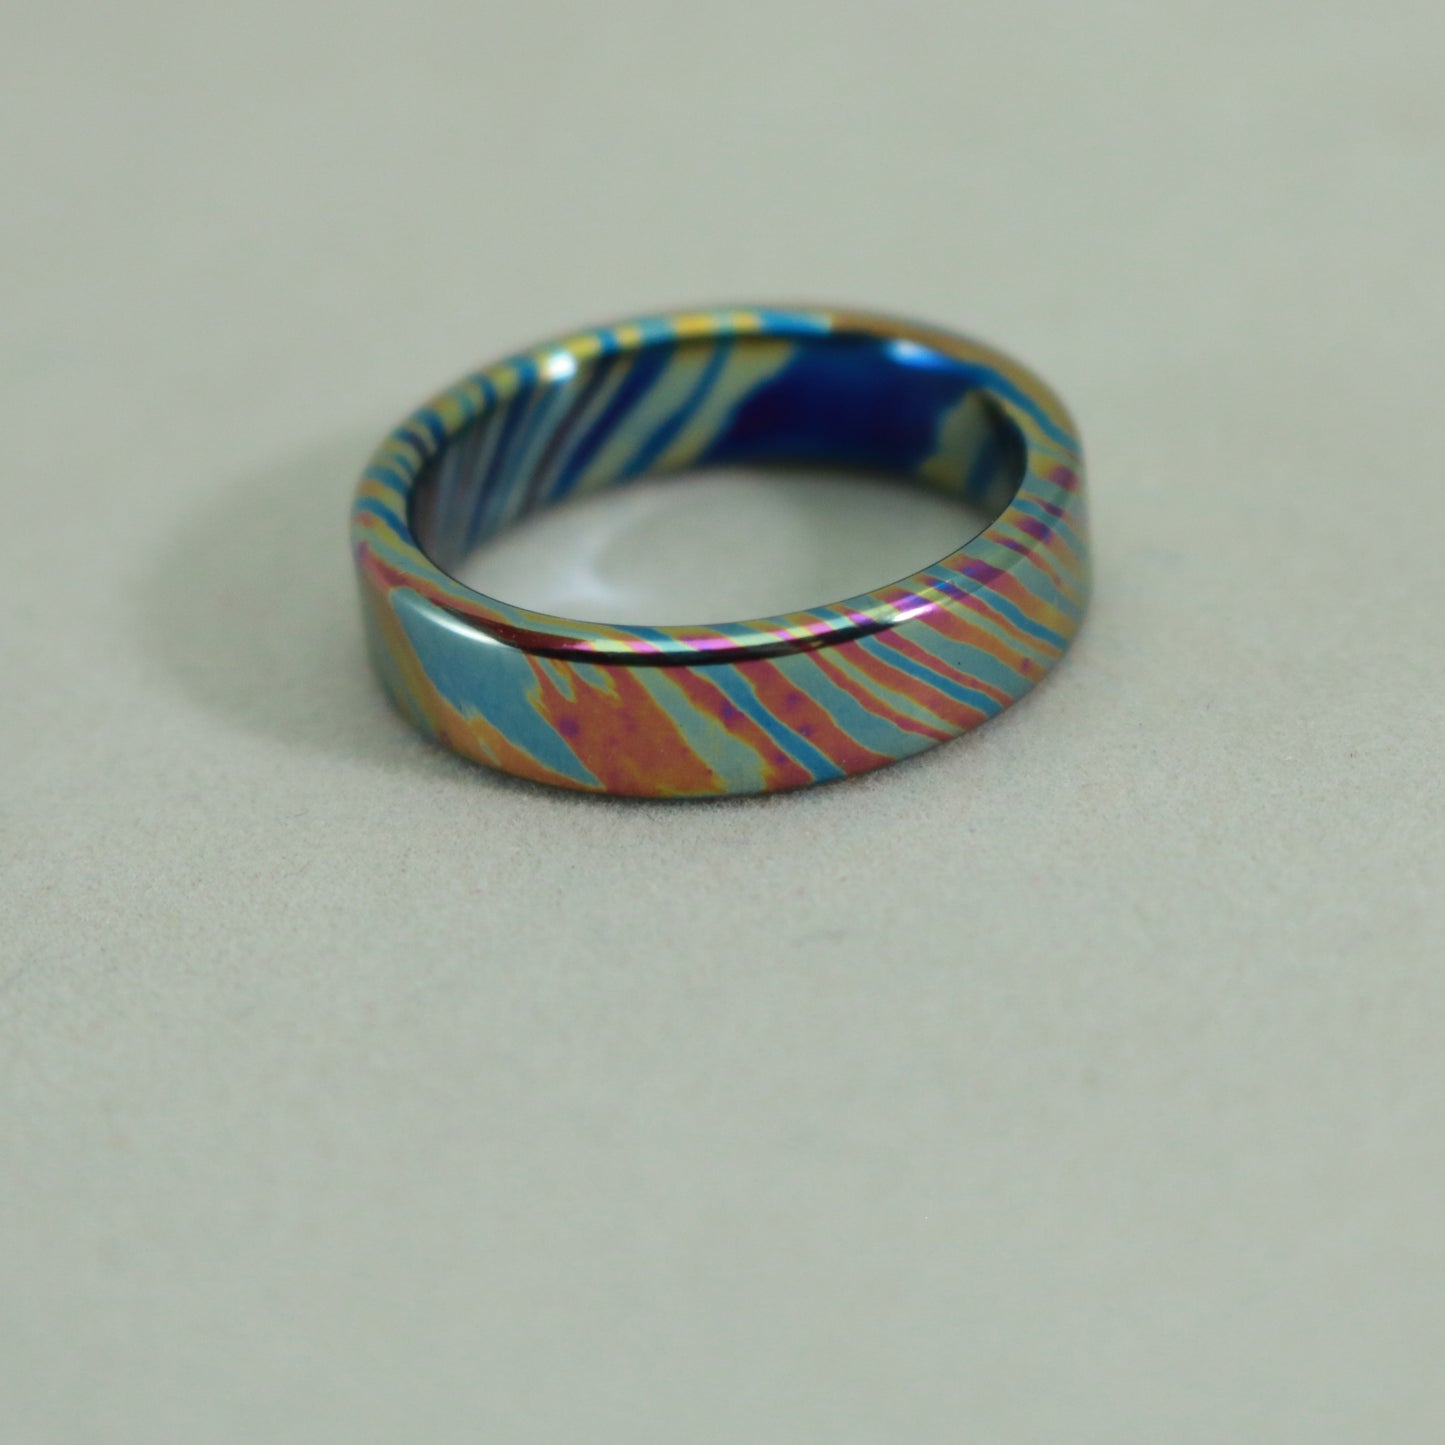 4 Alloy TwisTi Titanium Ring - size 7 1/4 (Light Colors)